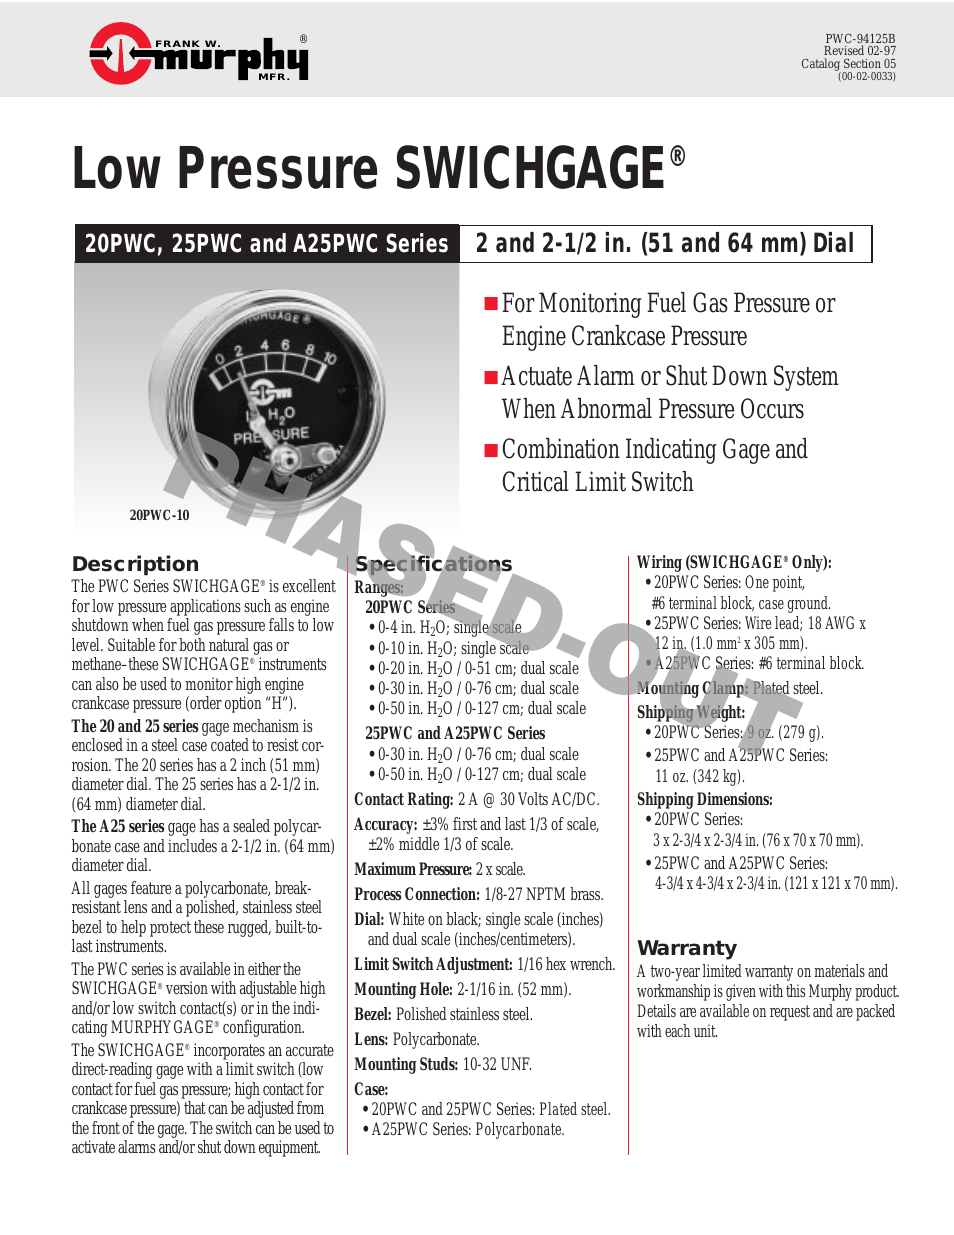 Low Pressure SWICHGAGE A25PWC